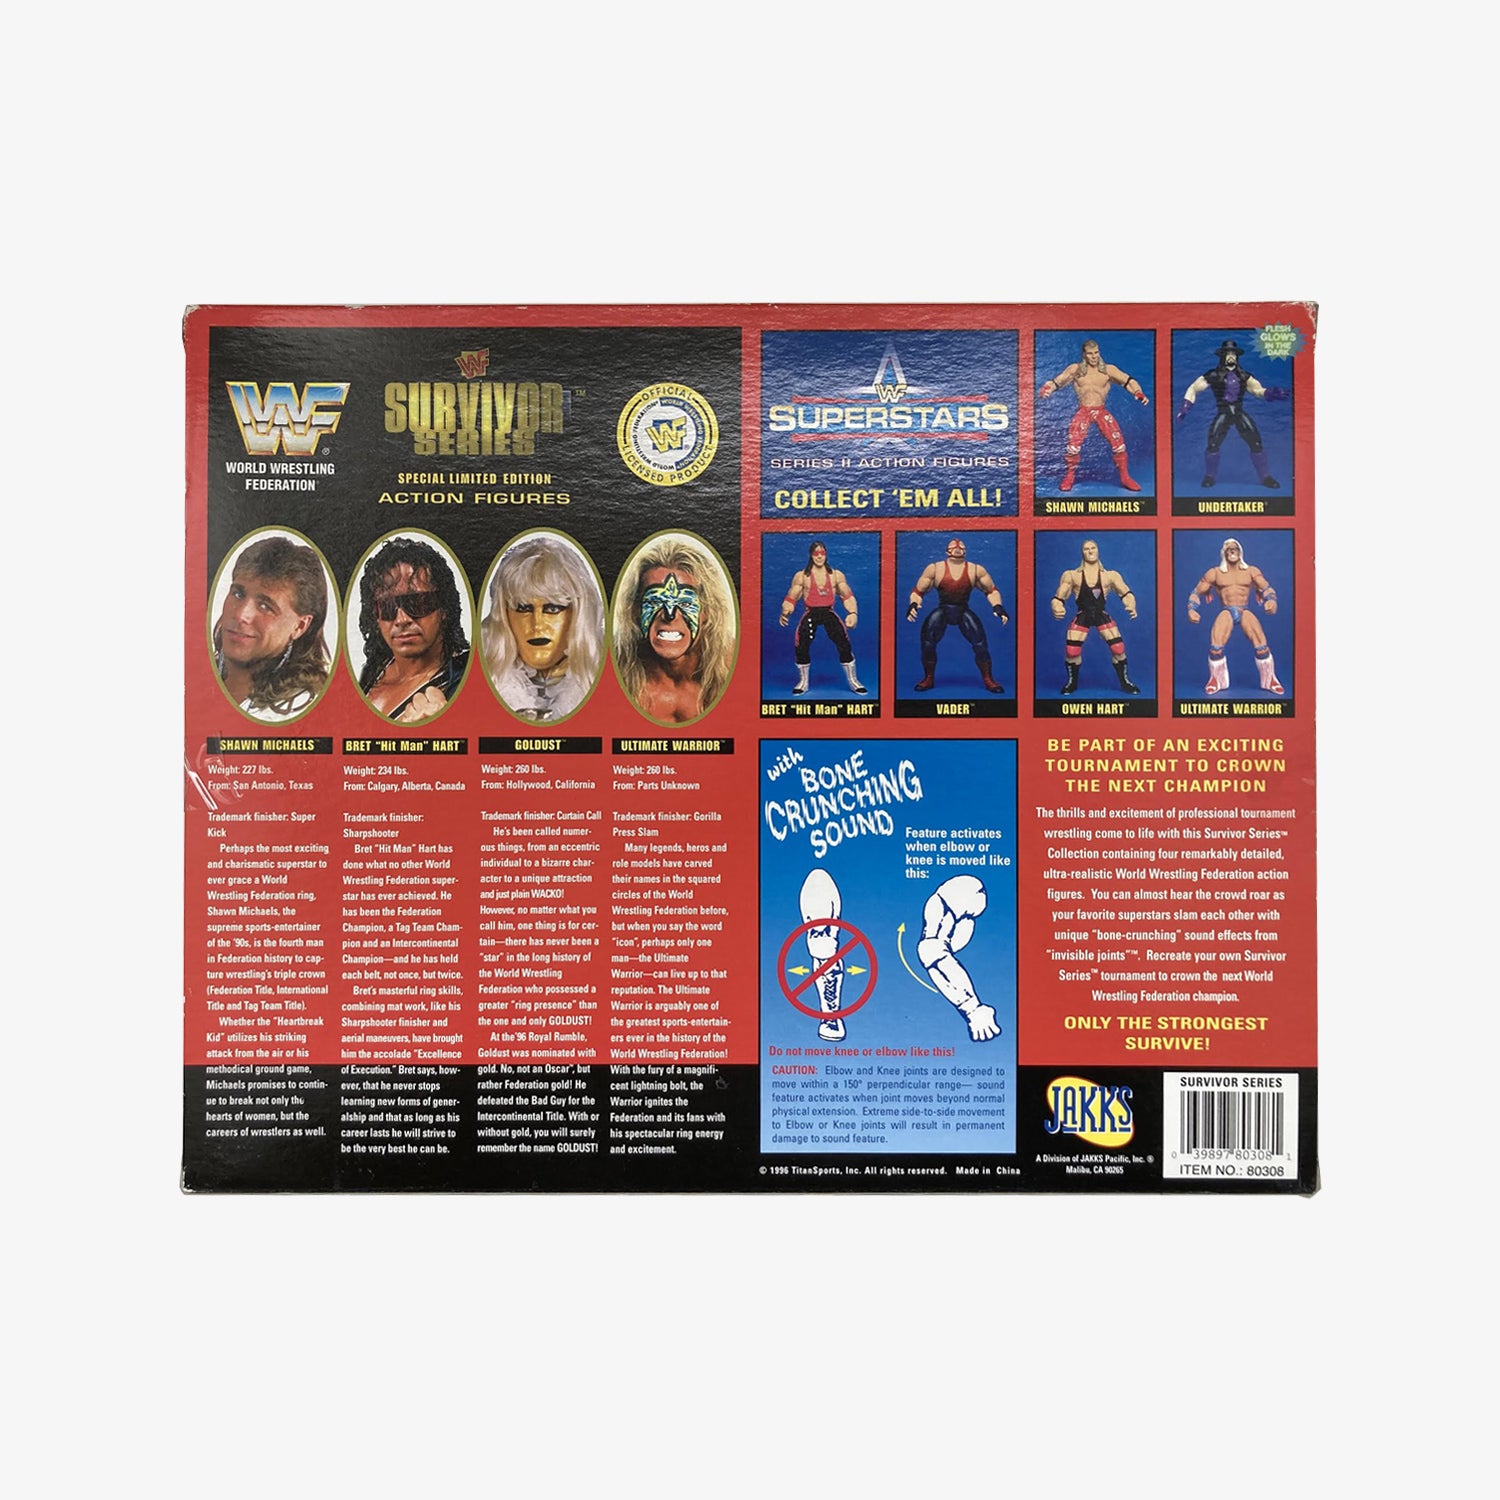 WWF Jakks Pacific Survivor Series box set available at slamazon.ca